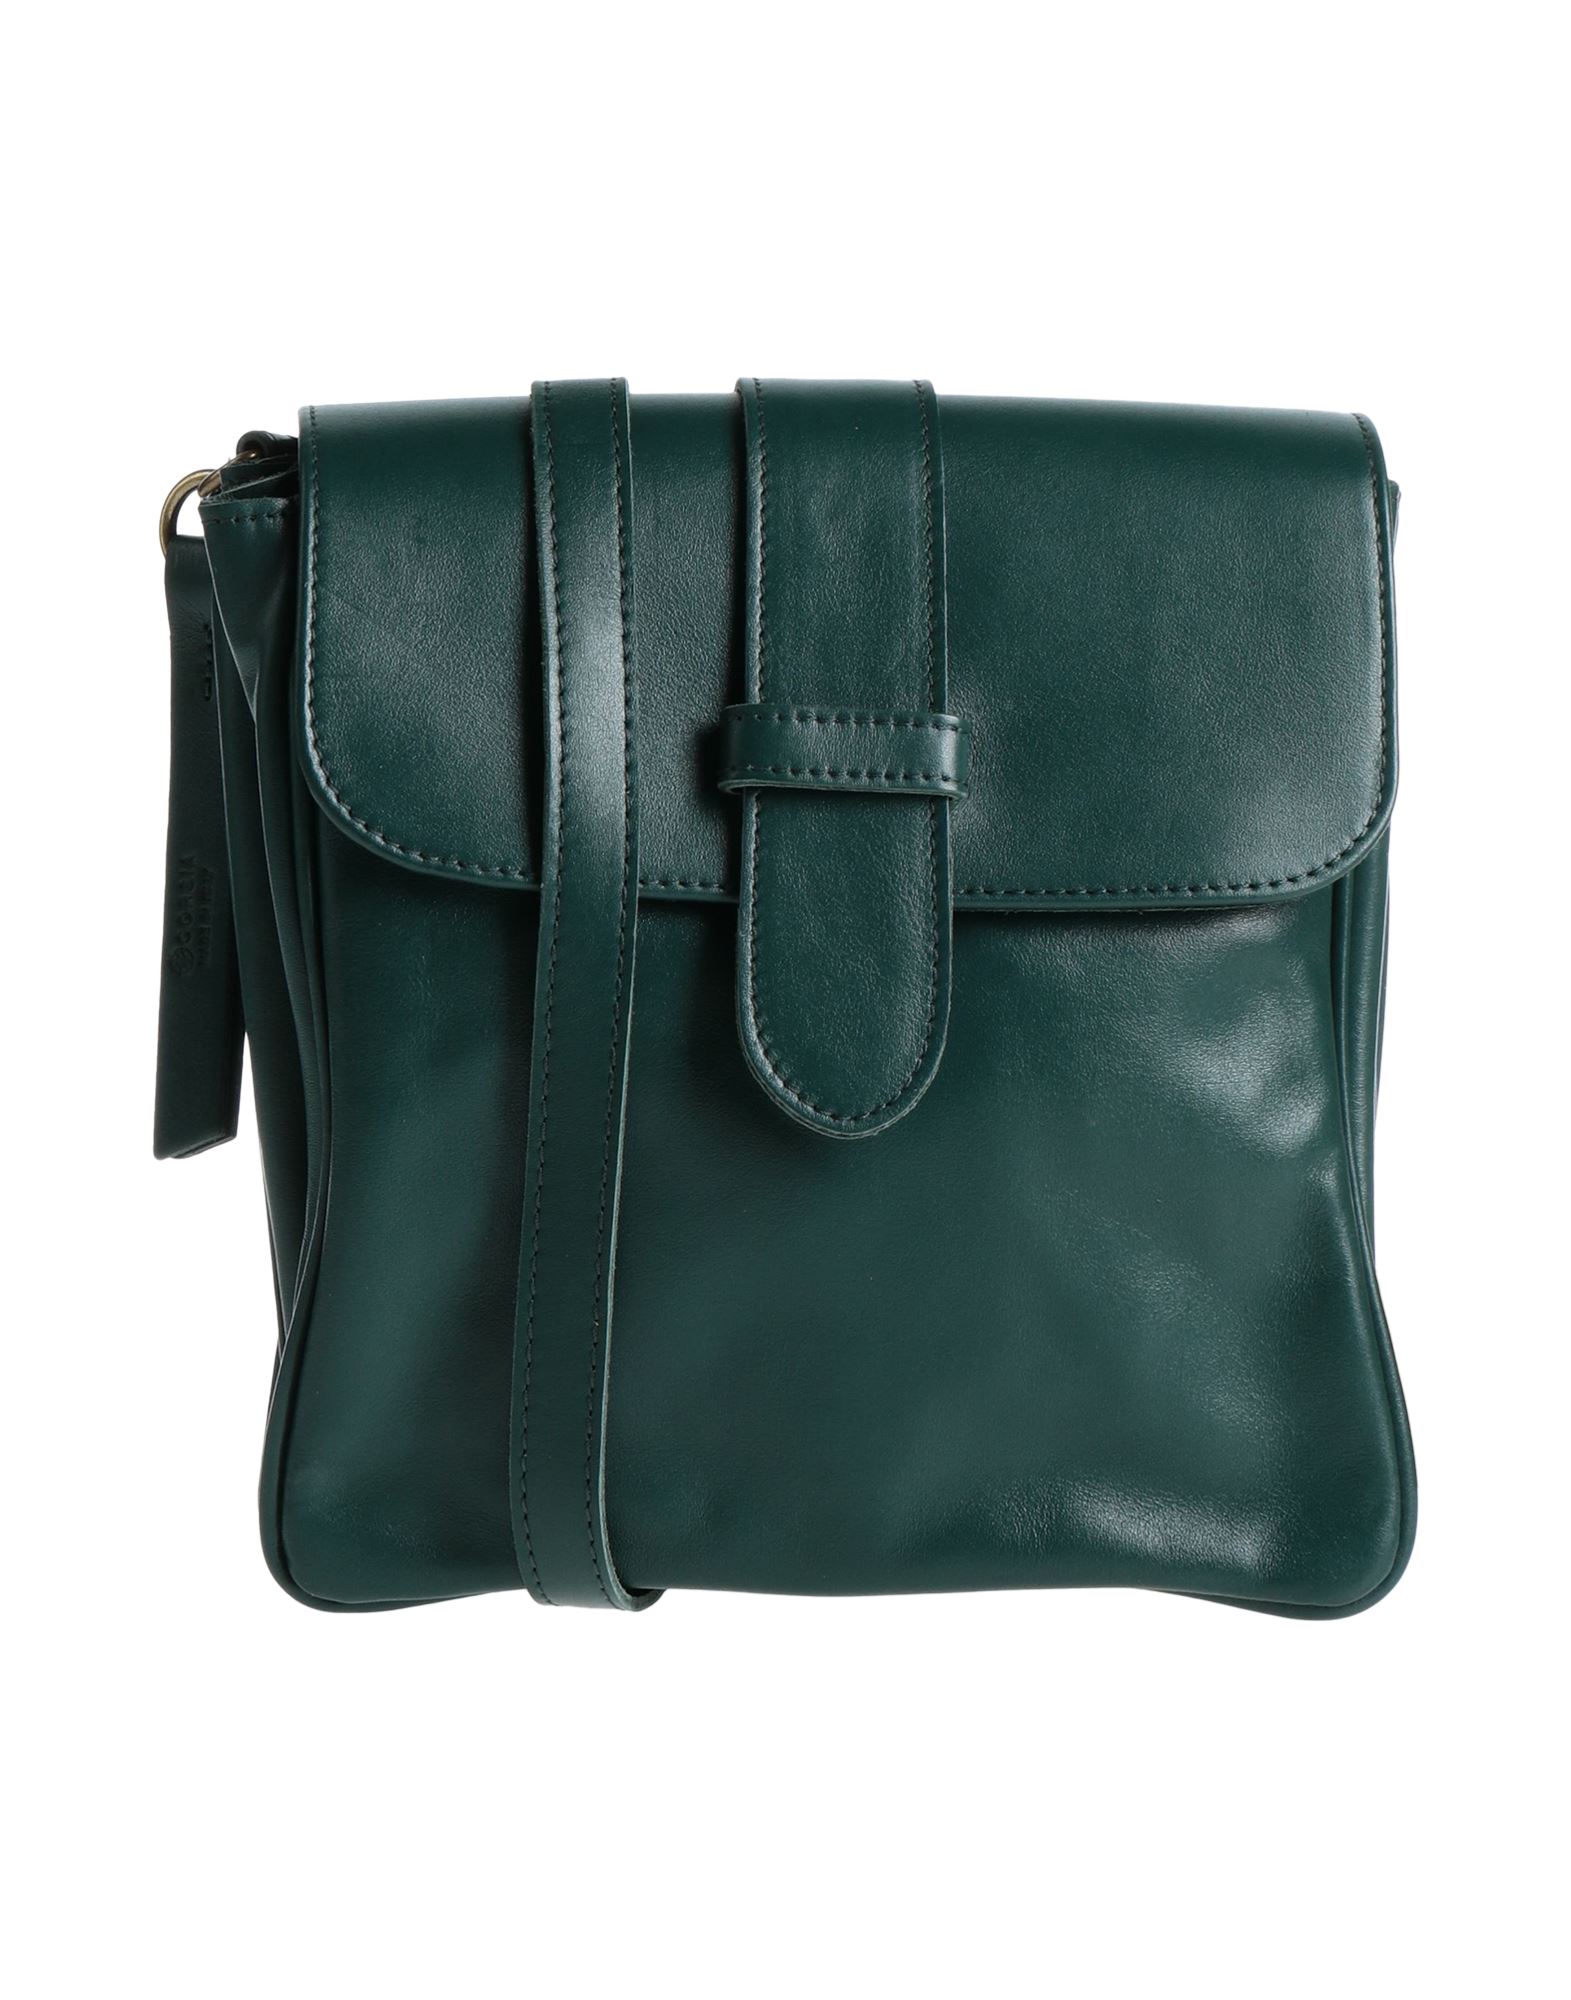 Corsia Handbags In Deep Jade